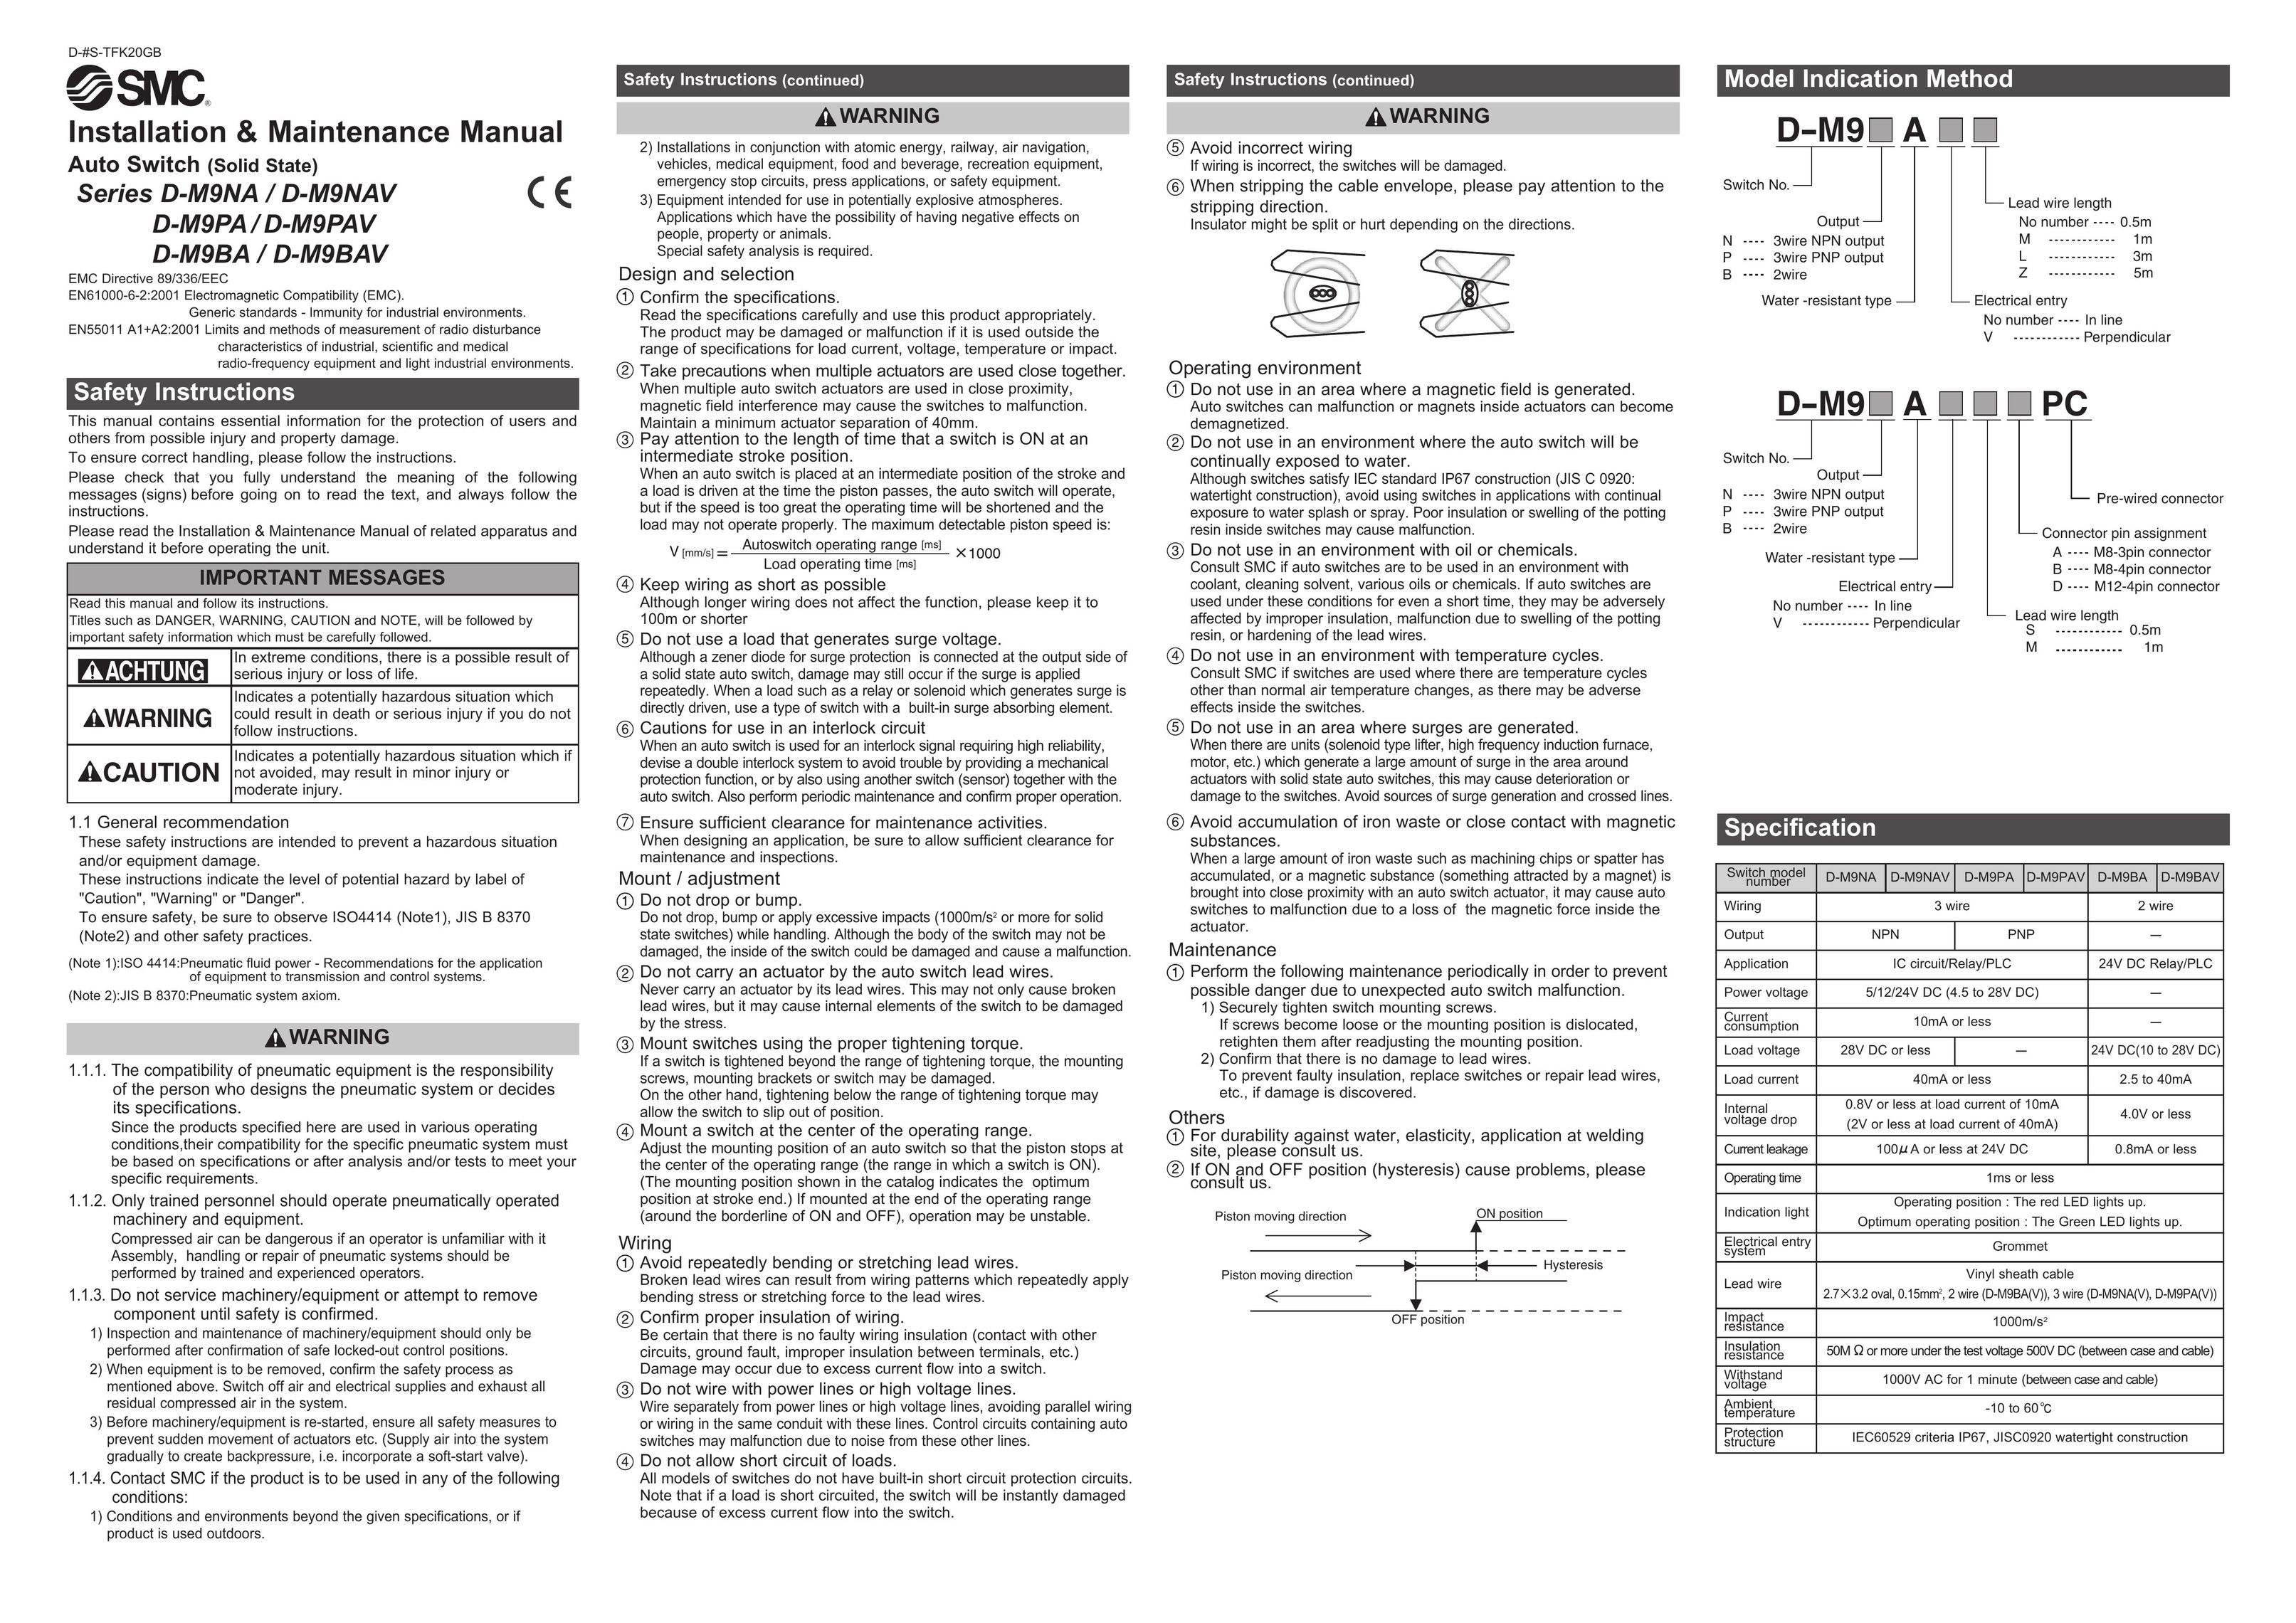 Sierra Monitor Corporation D-M9BAV Switch User Manual